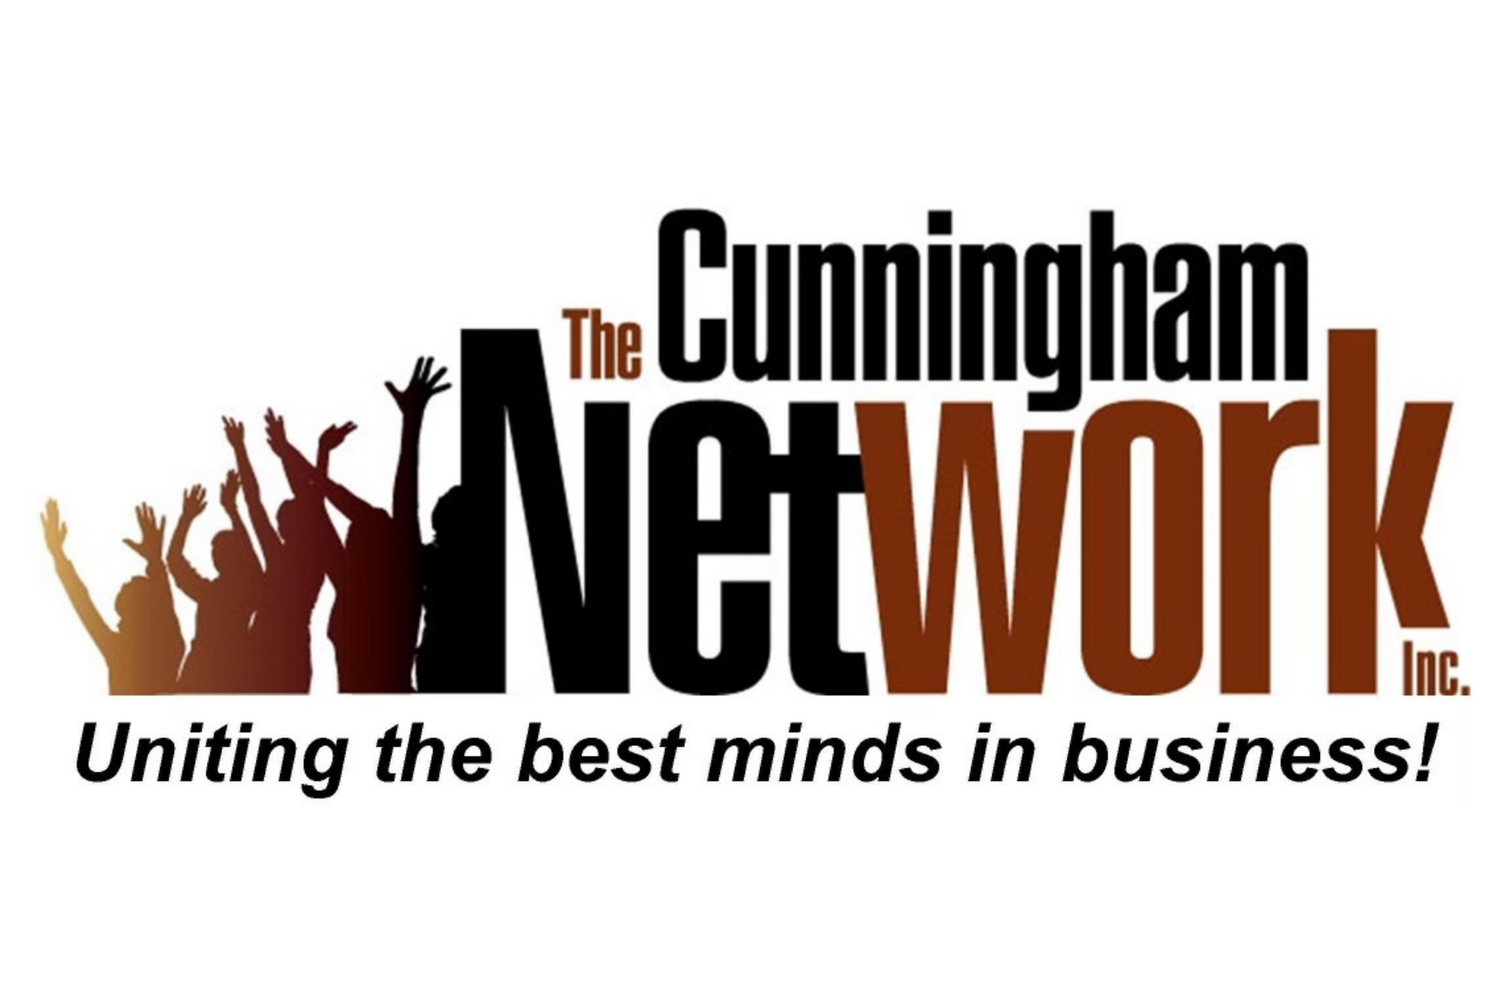 Cunningham Network Inc